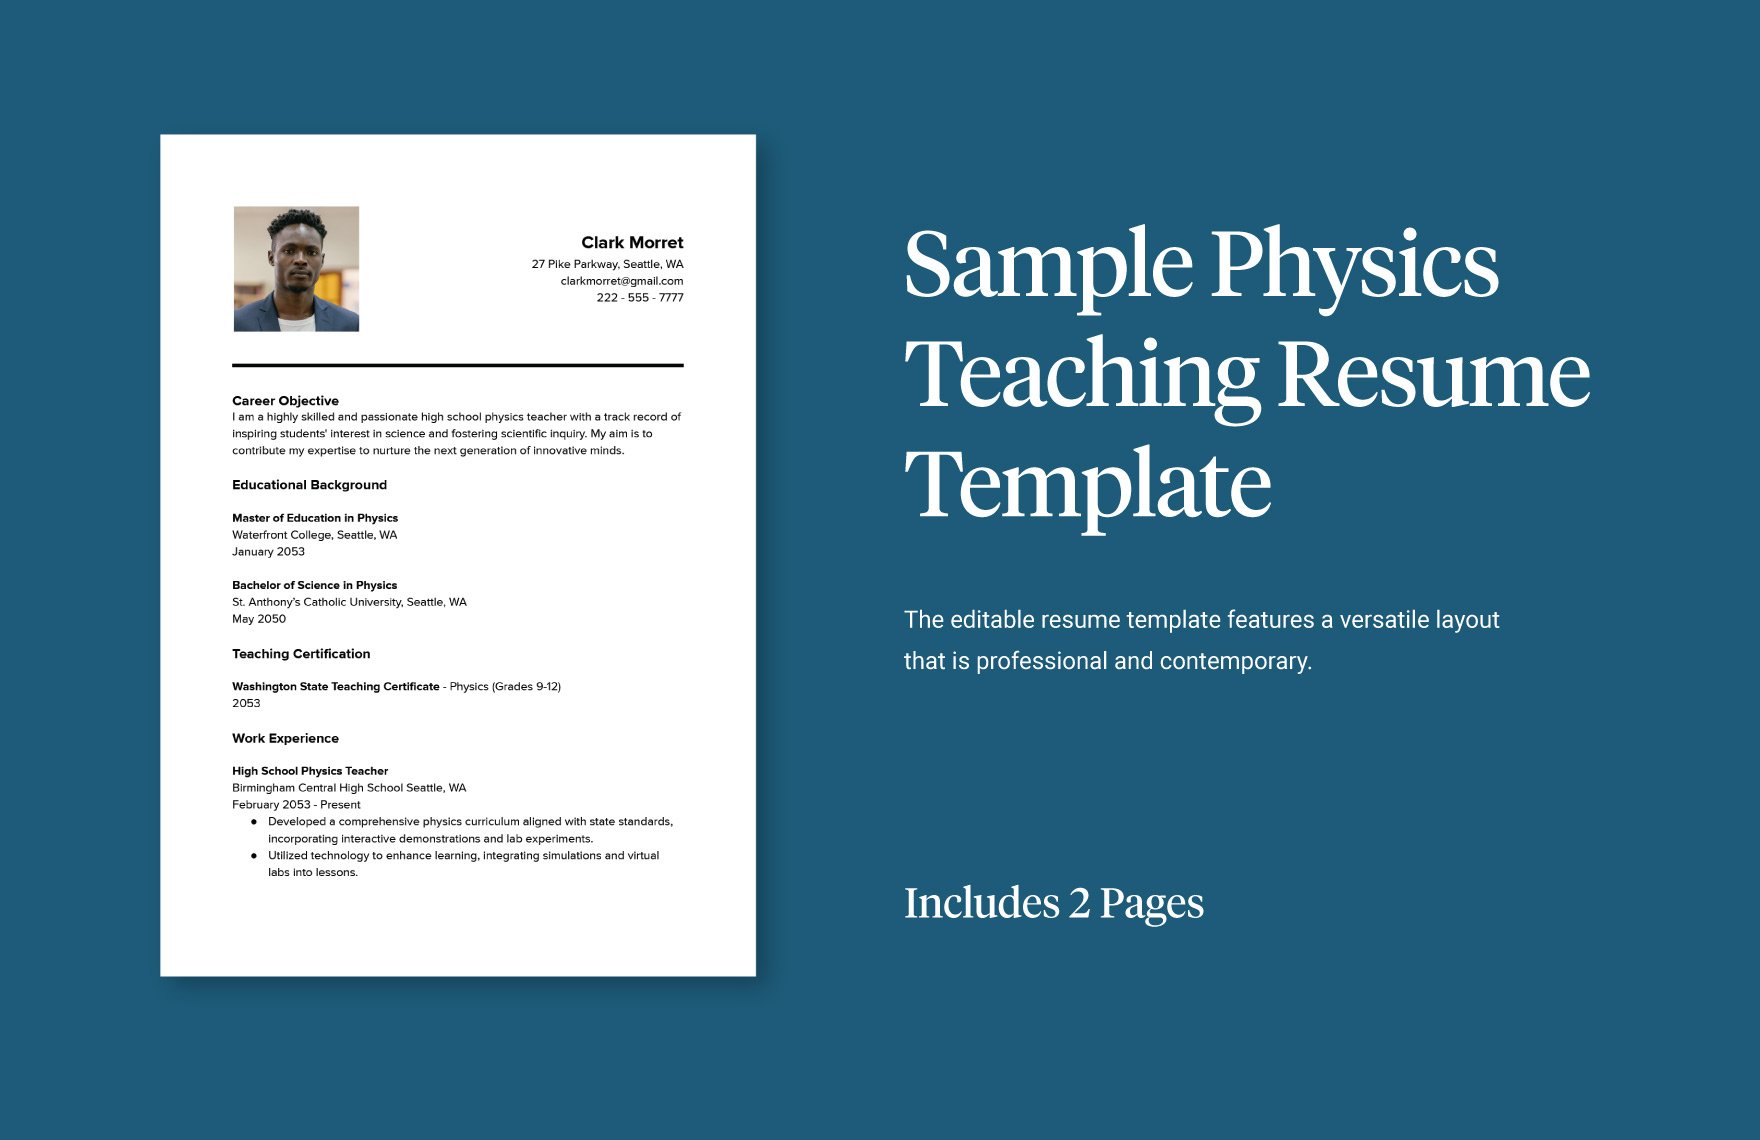 Sample Physics Teaching Resume Template